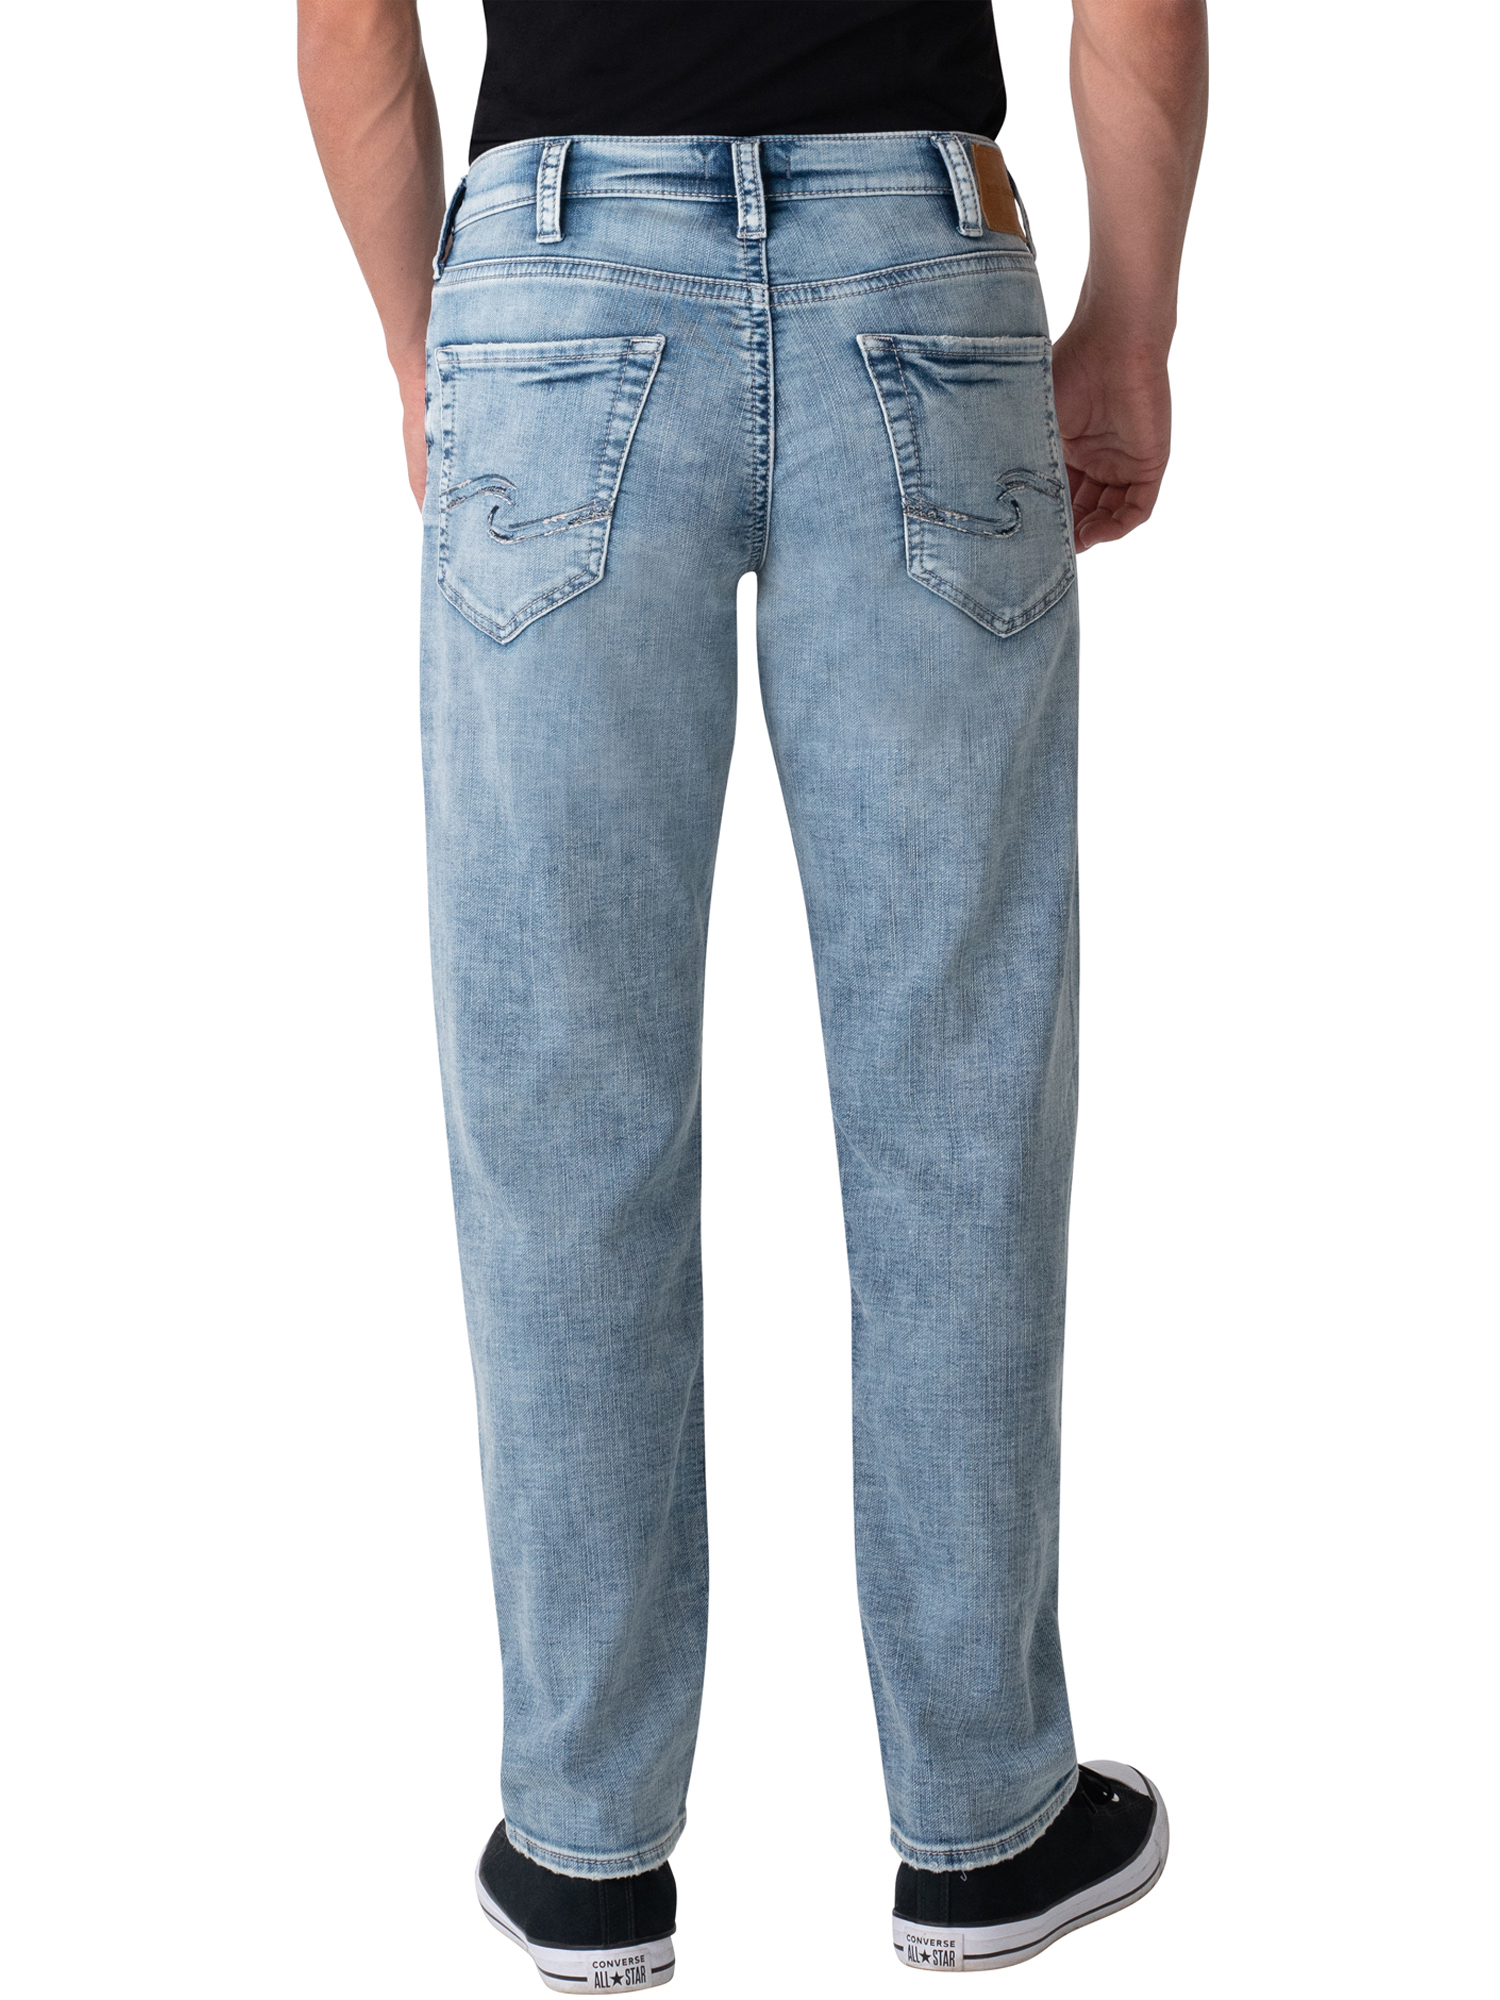 Silver Jeans Co. Men's Kenaston Slim Fit Slim Leg Jeans, Waist Sizes 28-40 - image 2 of 3